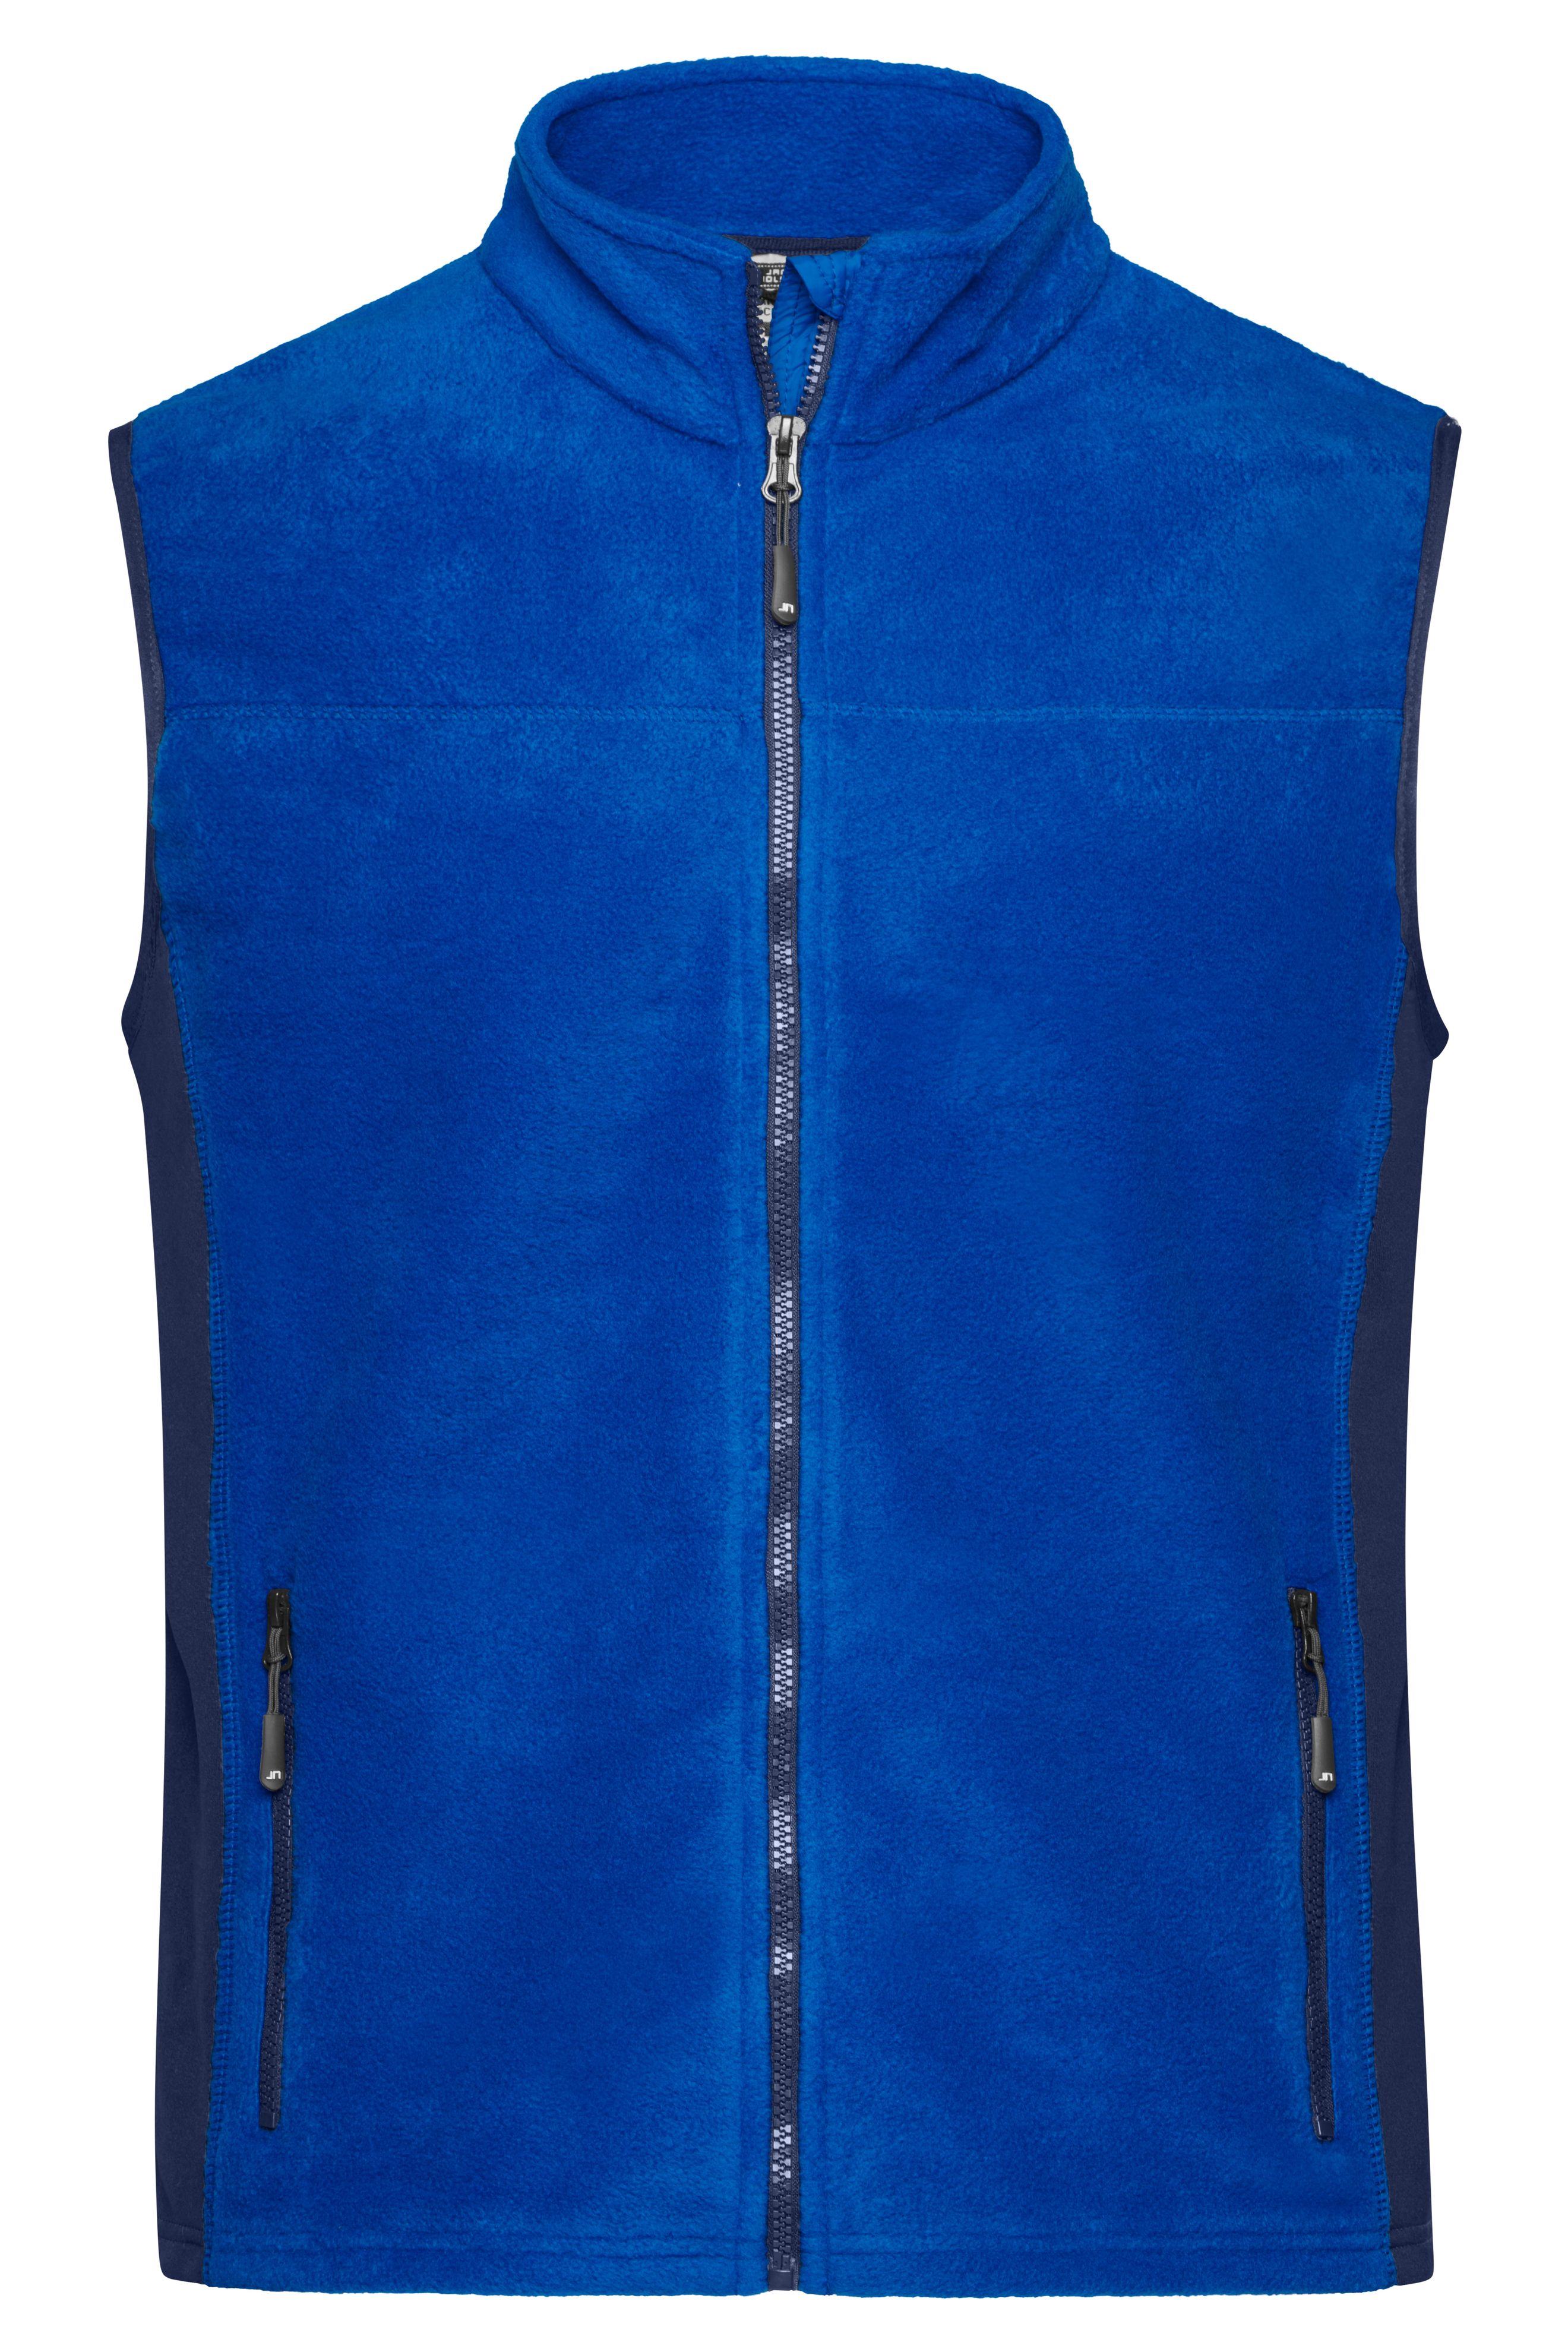 Men Men's Workwear Fleece Vest - STRONG - Royal/navy-Workweartextilien